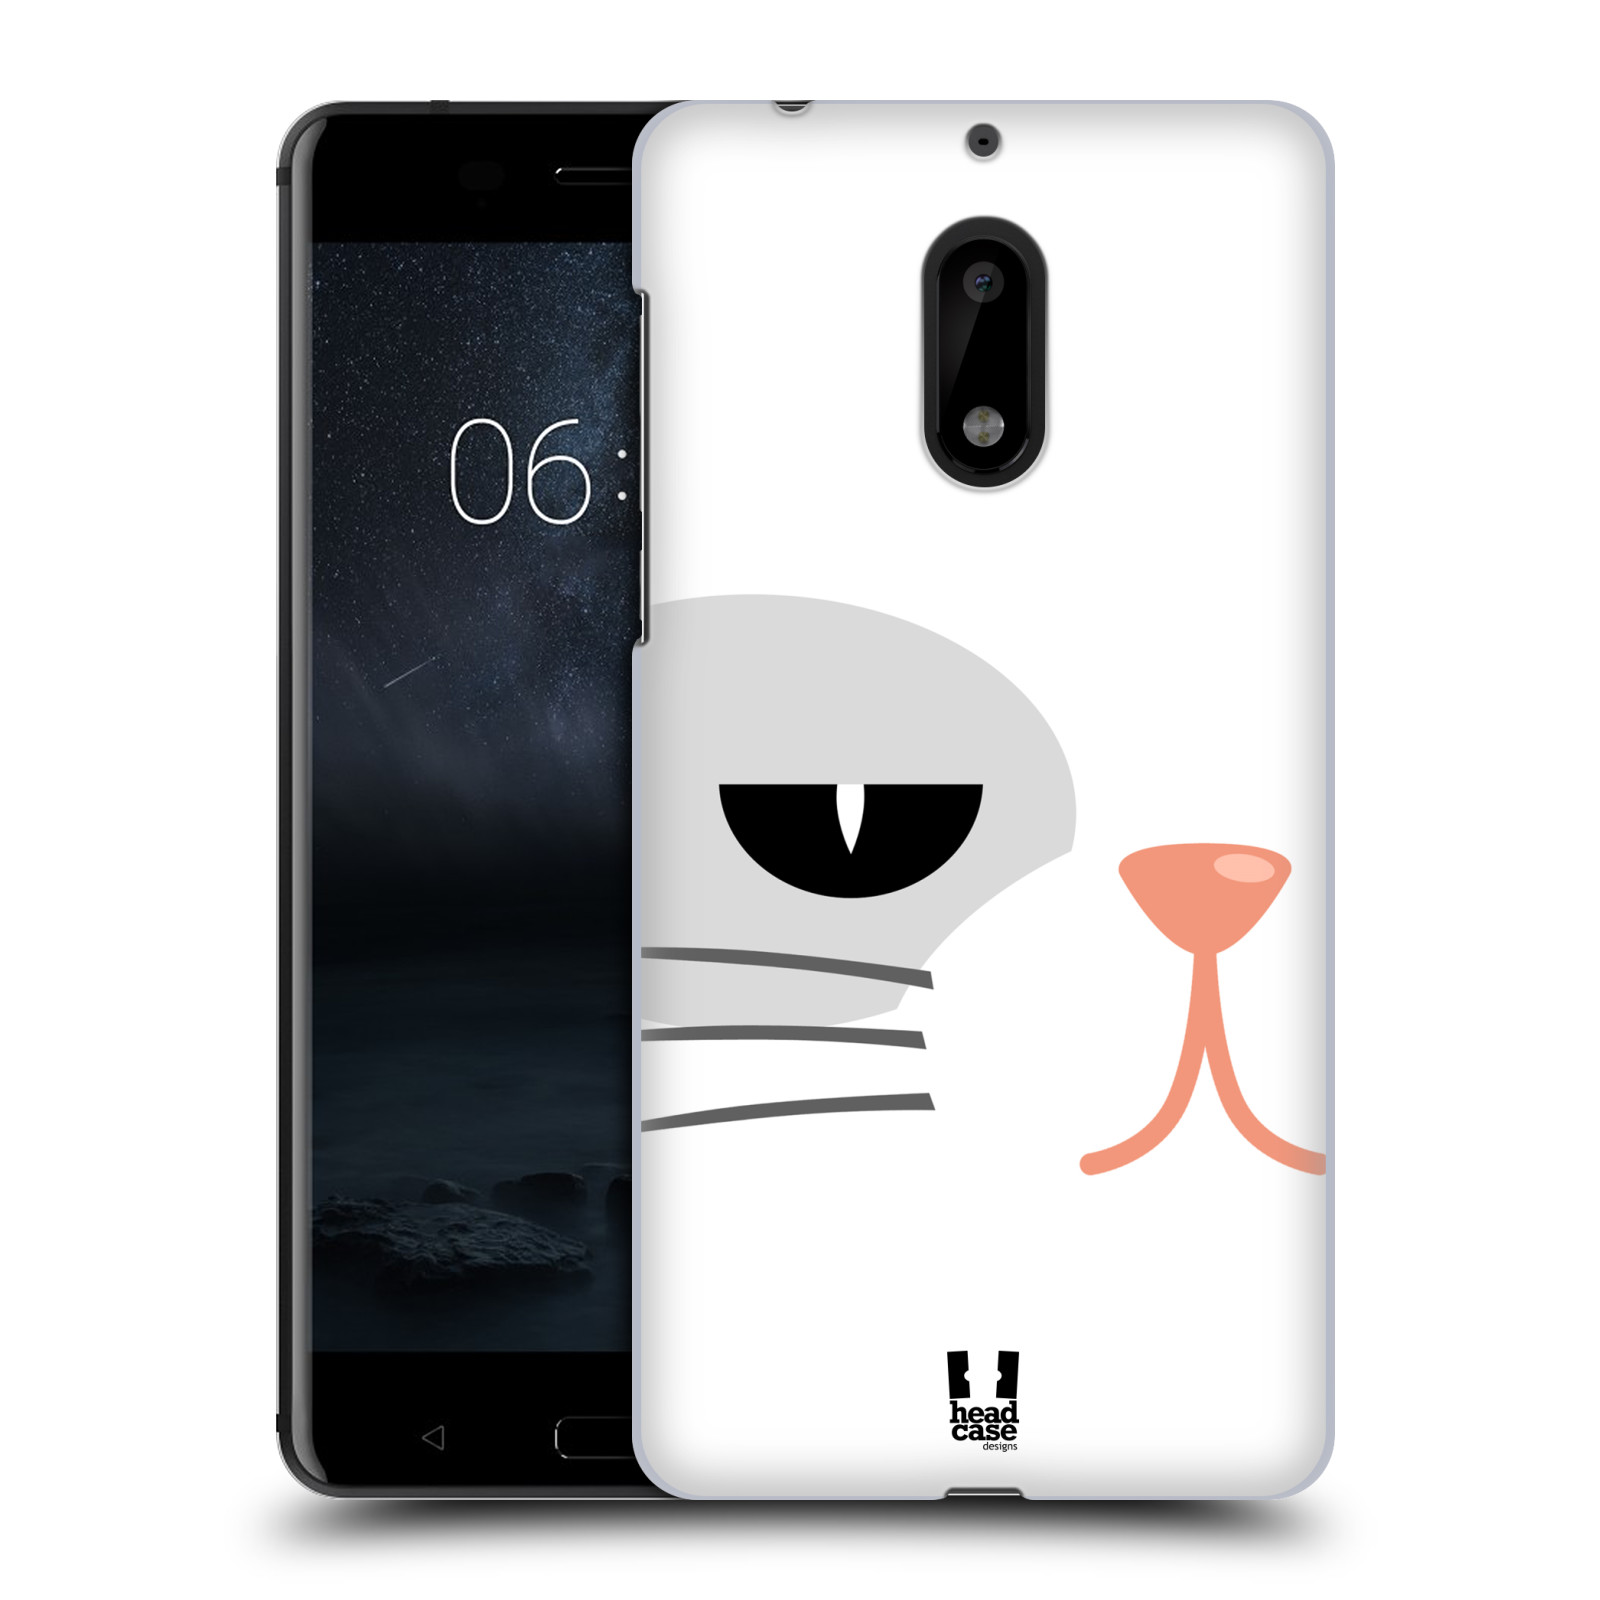 HEAD CASE plastový obal na mobil Nokia 6 vzor Celá tvář zvíře kreslený portrét kočička